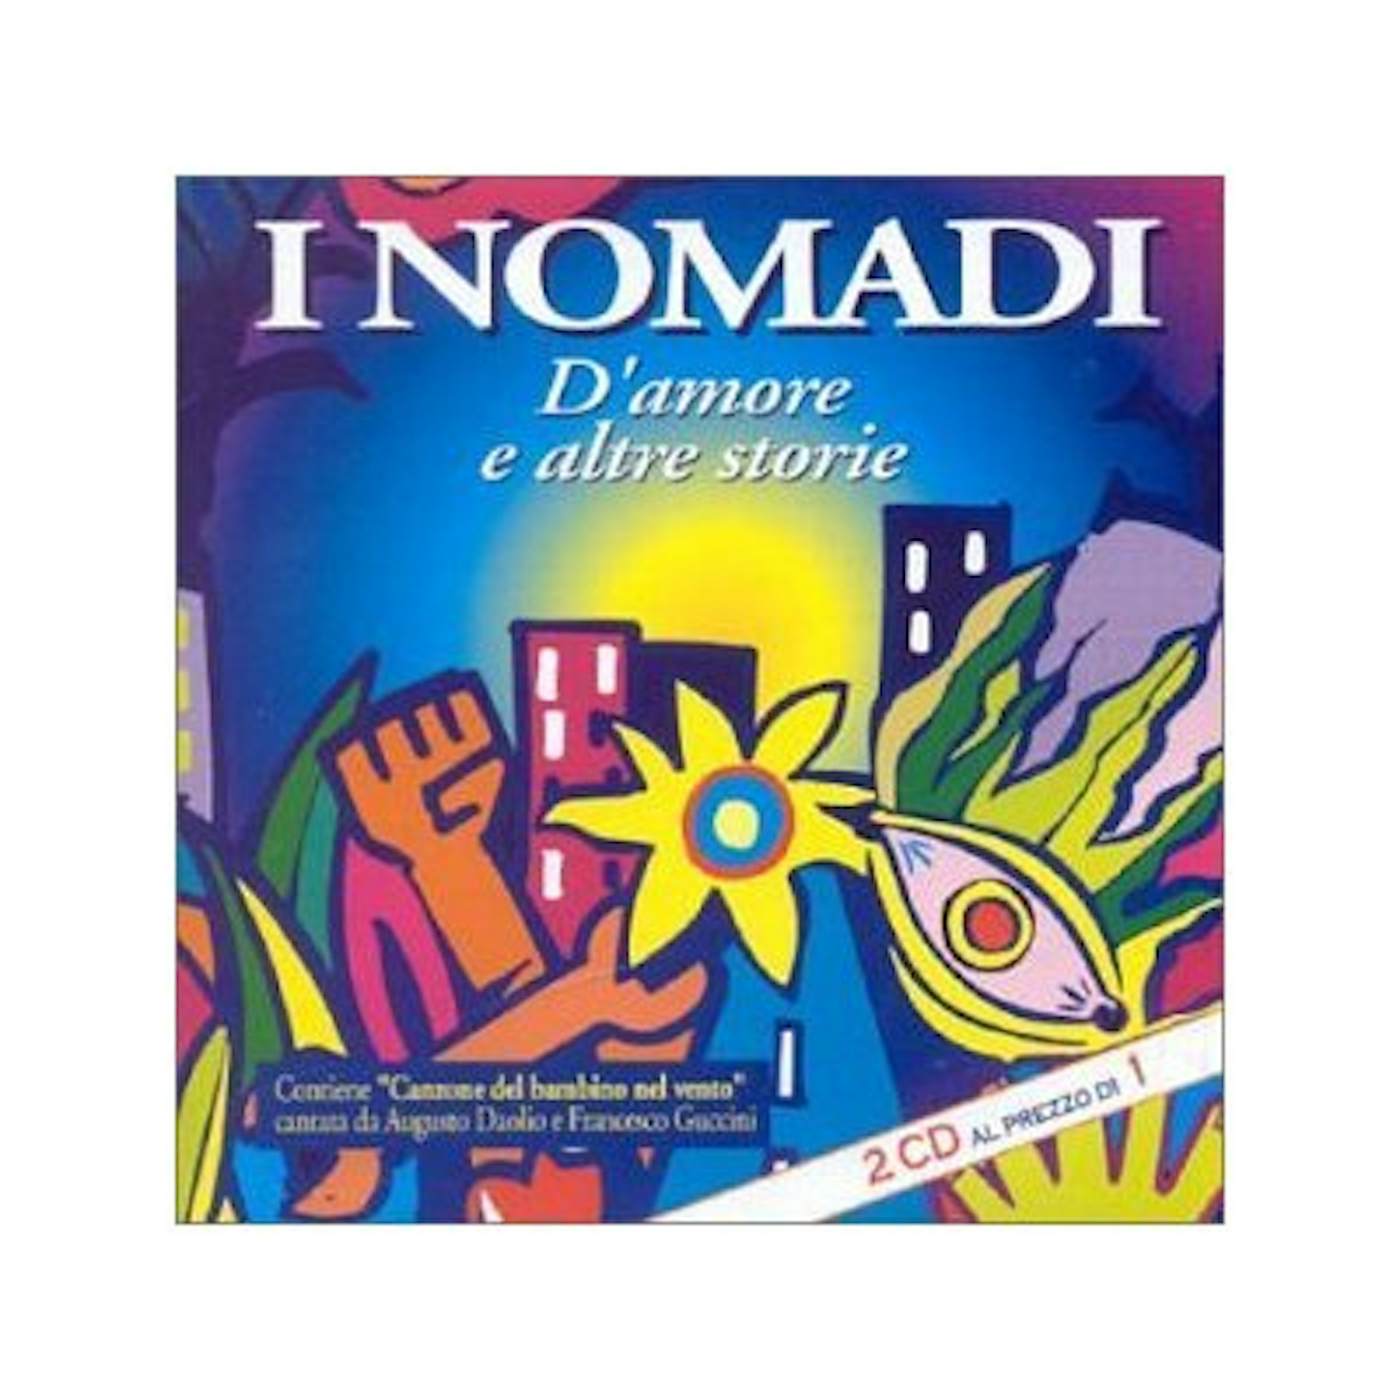 Nomadi D'AMORE E ALTRE STORIE CD